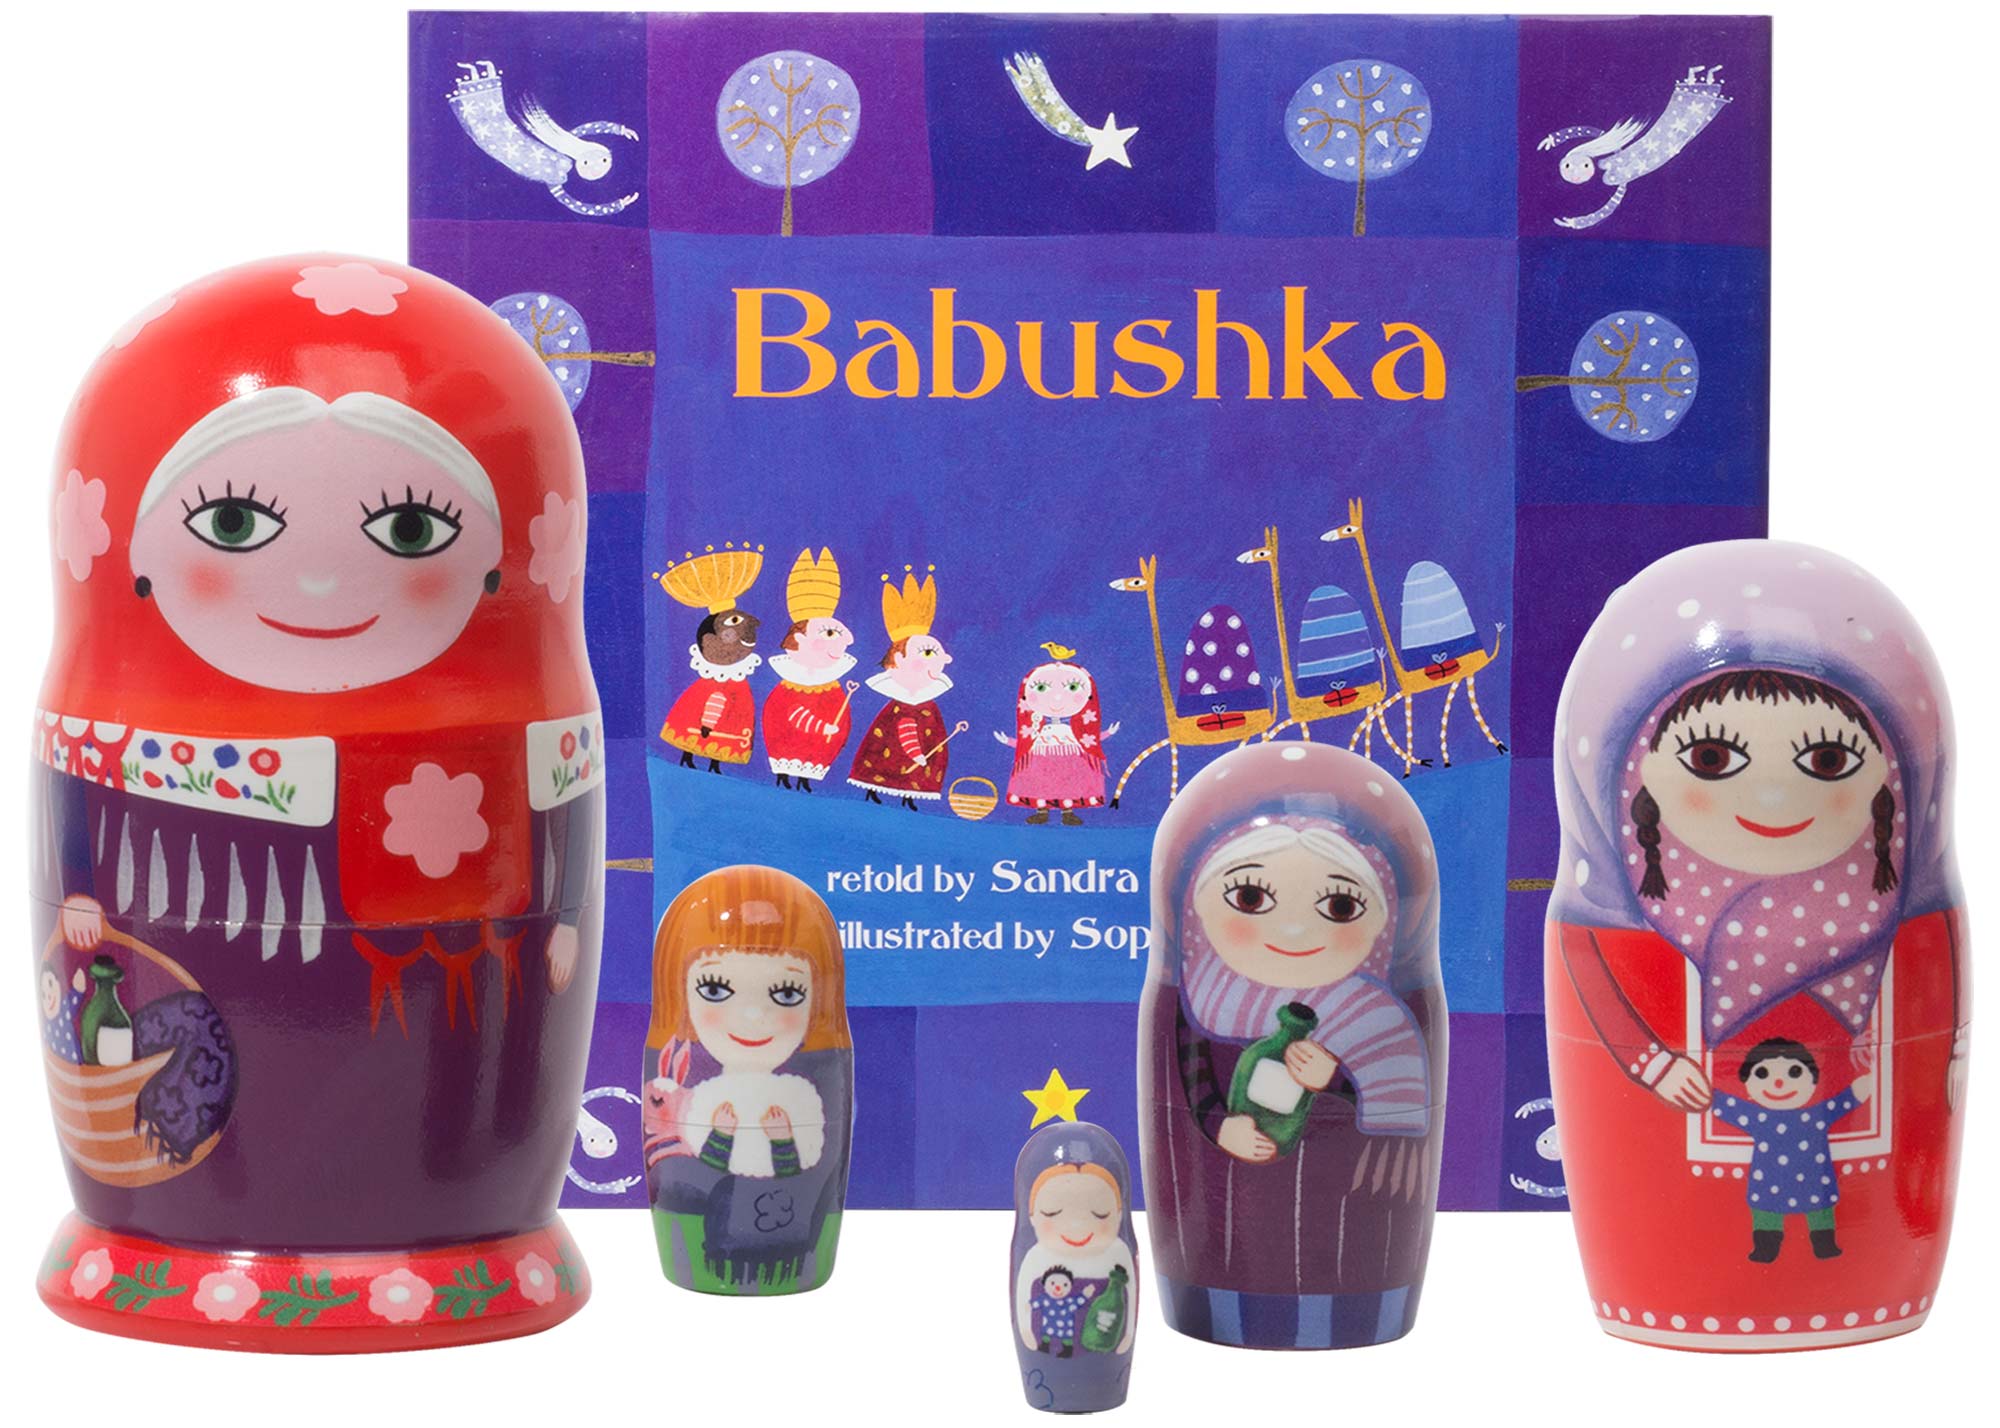 Buy Babushka Paperback Book and Nesting Doll Set at GoldenCockerel.com